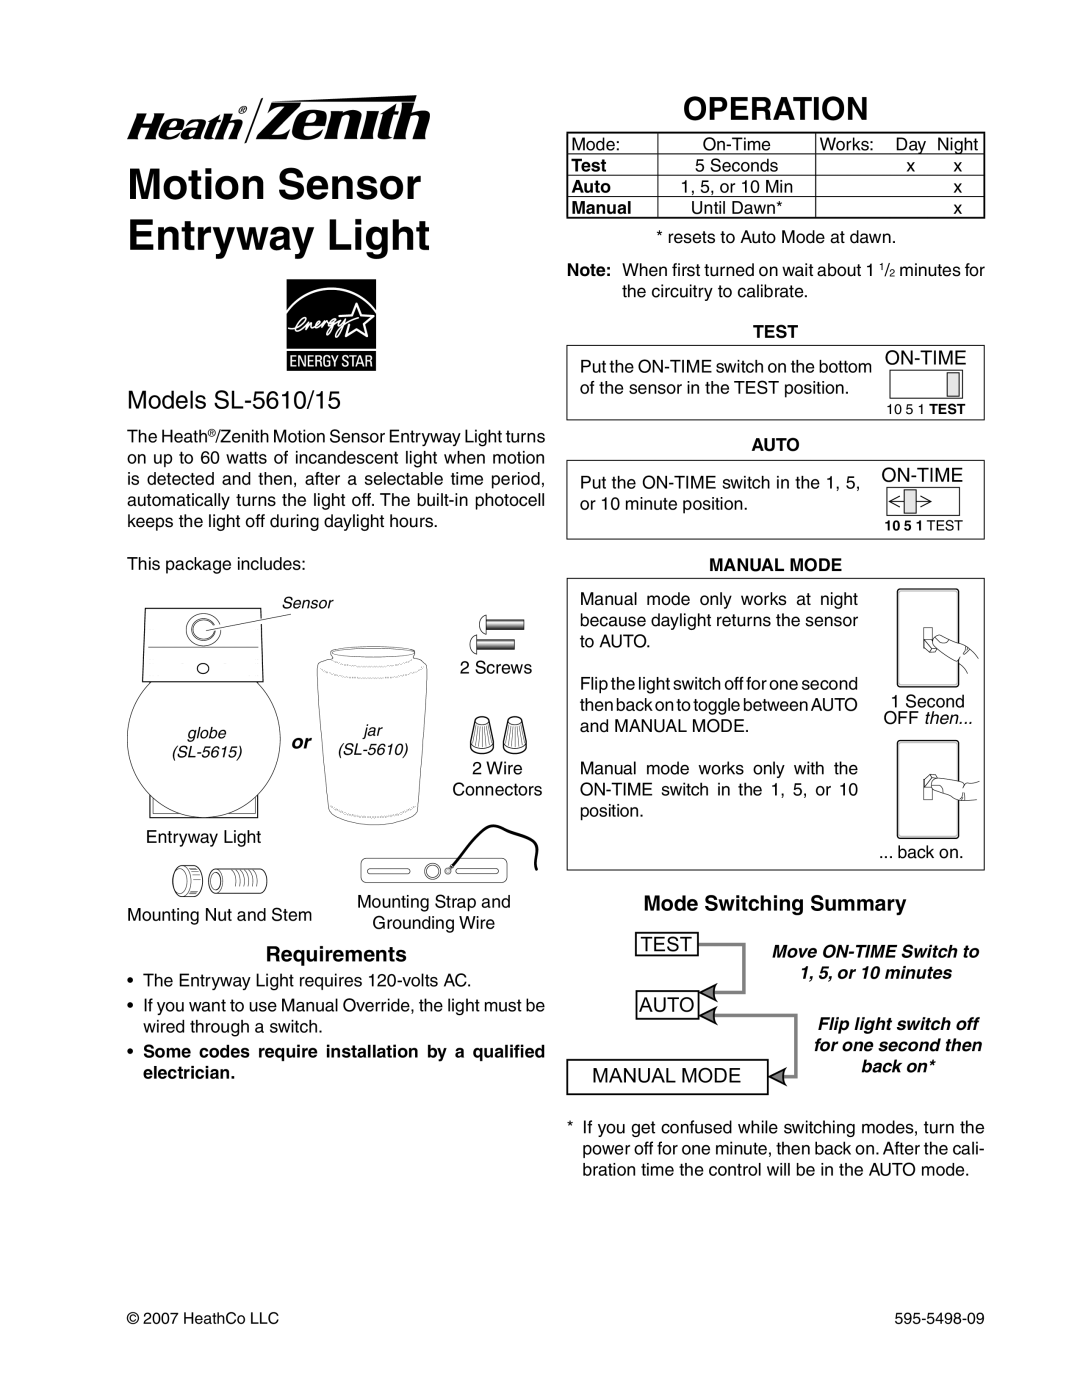 Heath Zenith manual Motion Sensor Entryway Light, Operation, Models SL-5610/15, Mode Switching Summary, On-Time, Test 